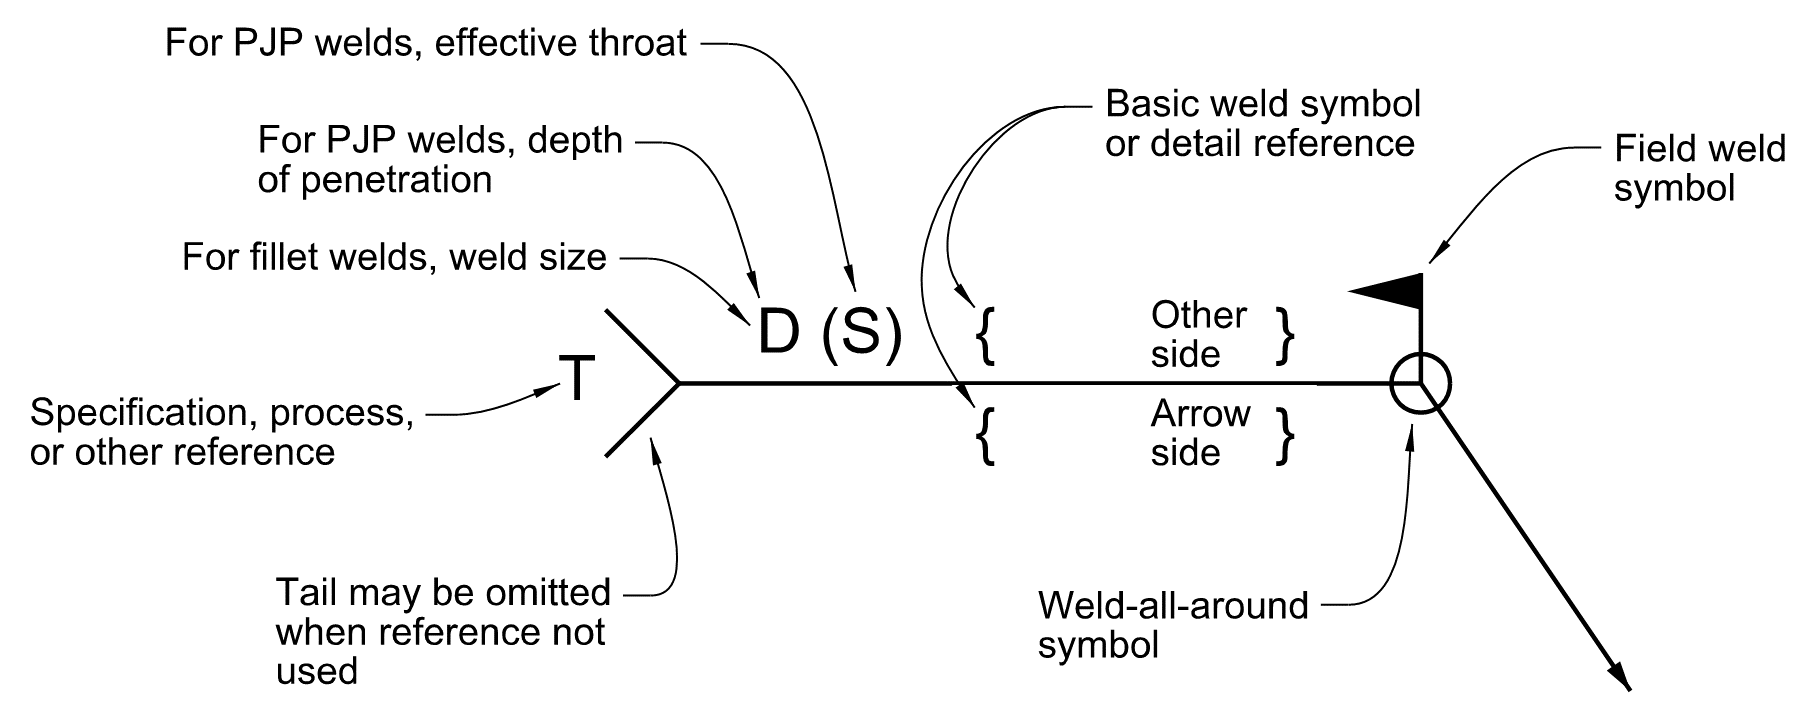 Basic welding symbol information for typical bridge welds.